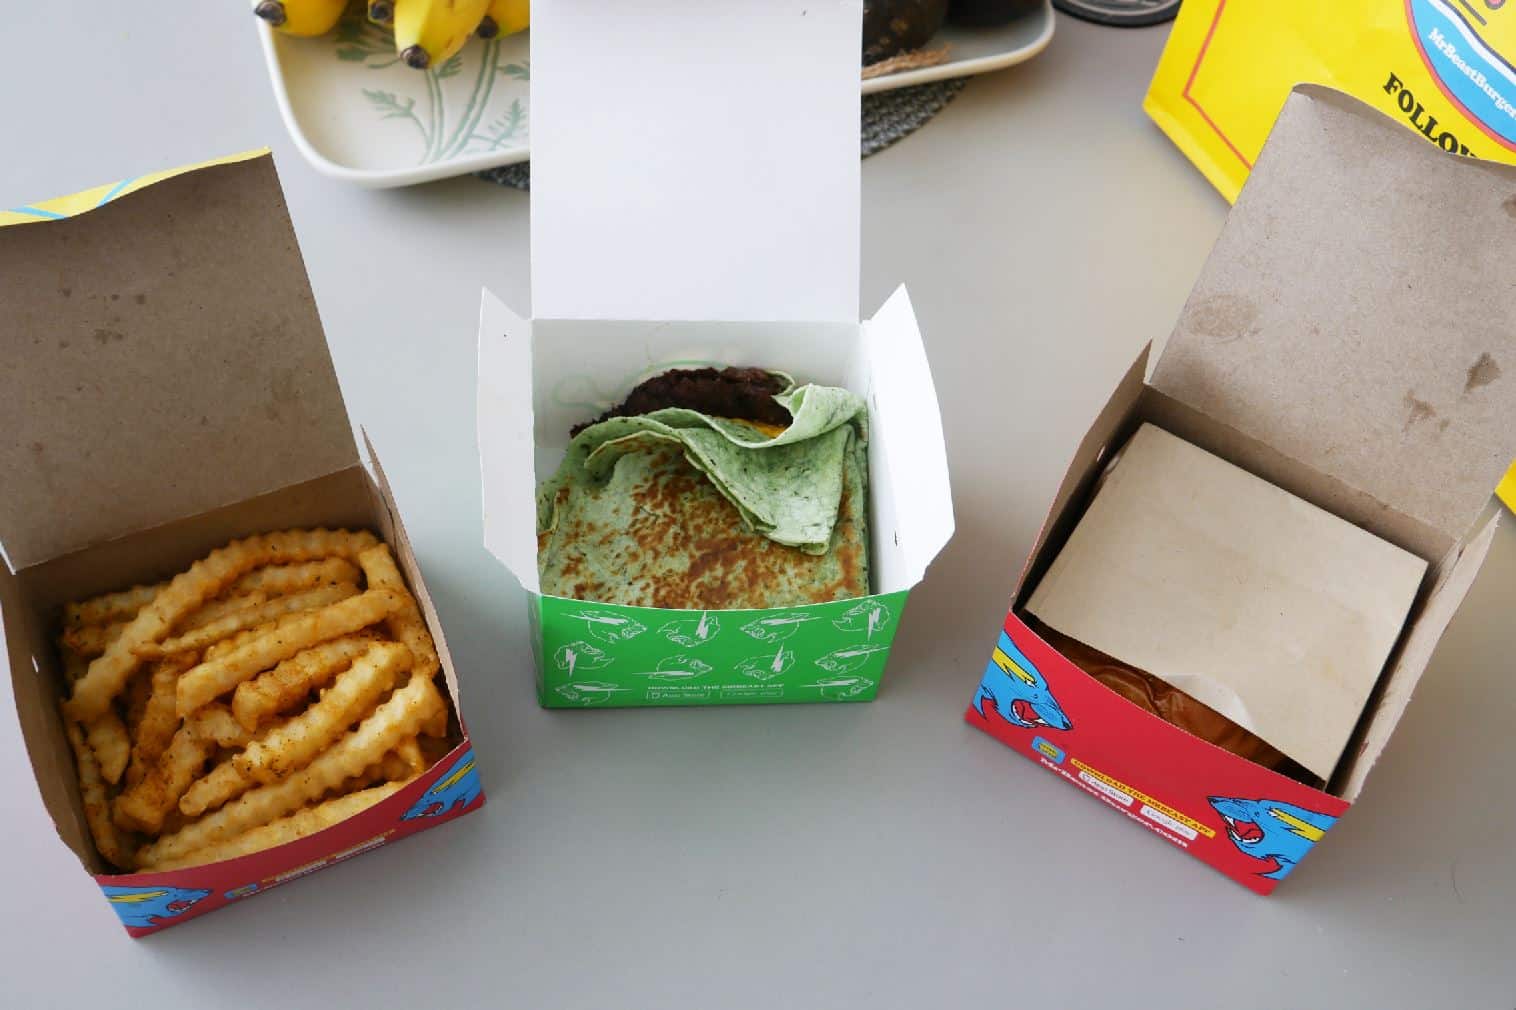 Shrek's Quesadilla available through MrBeast Burger